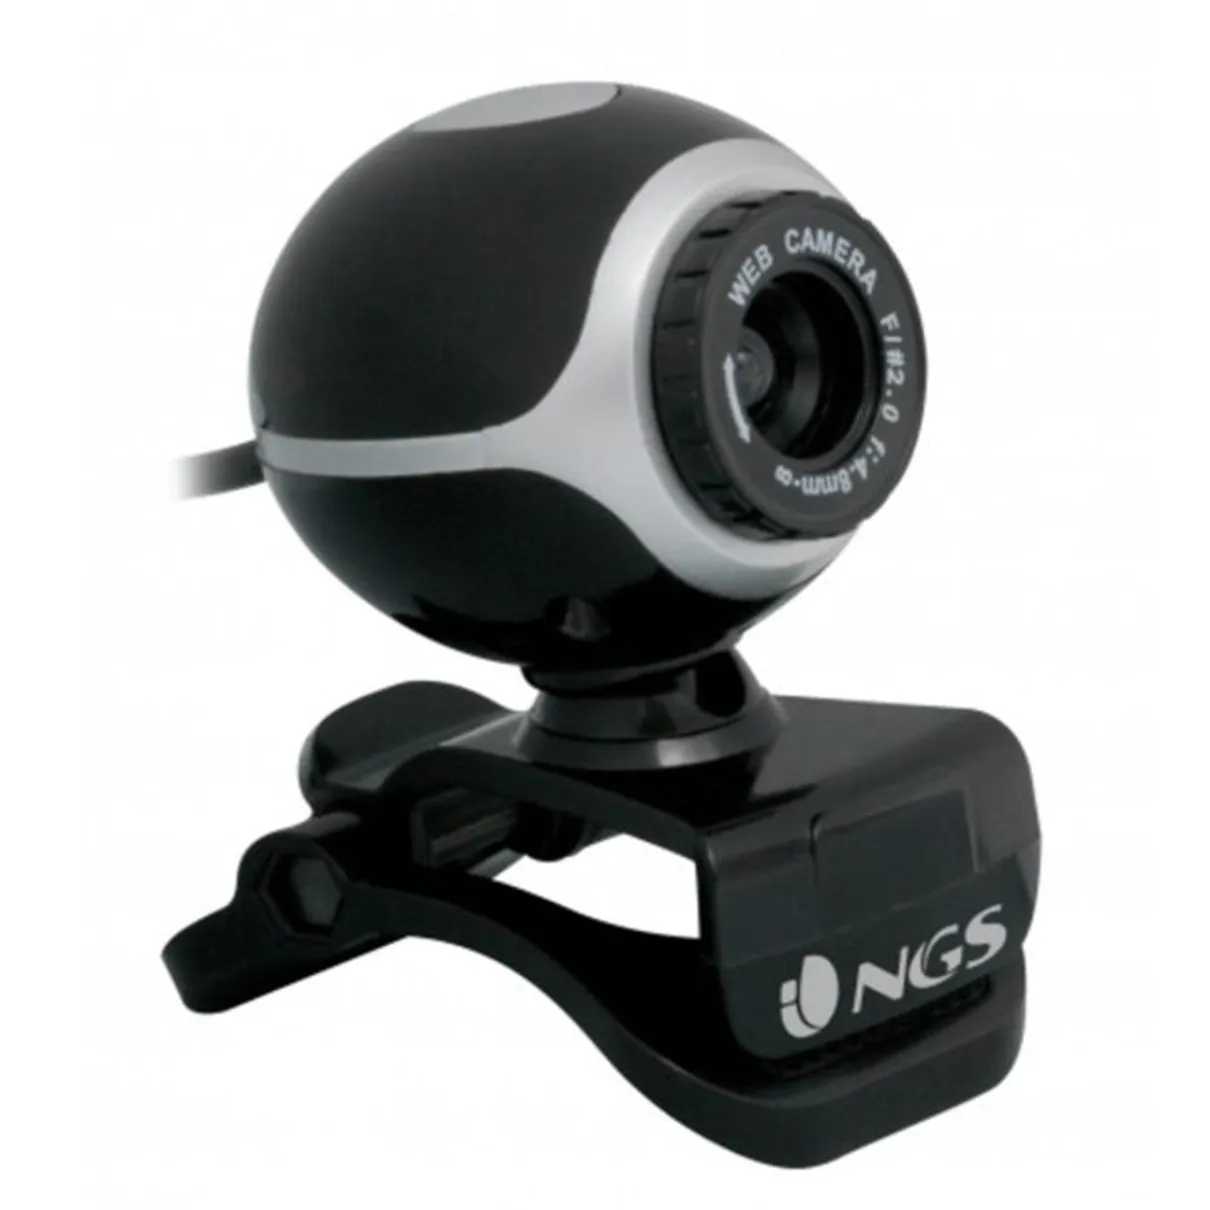 Webcam ngs xpress cam 300 - microfono incorporado - 5mpx - usb 2.0 - negro